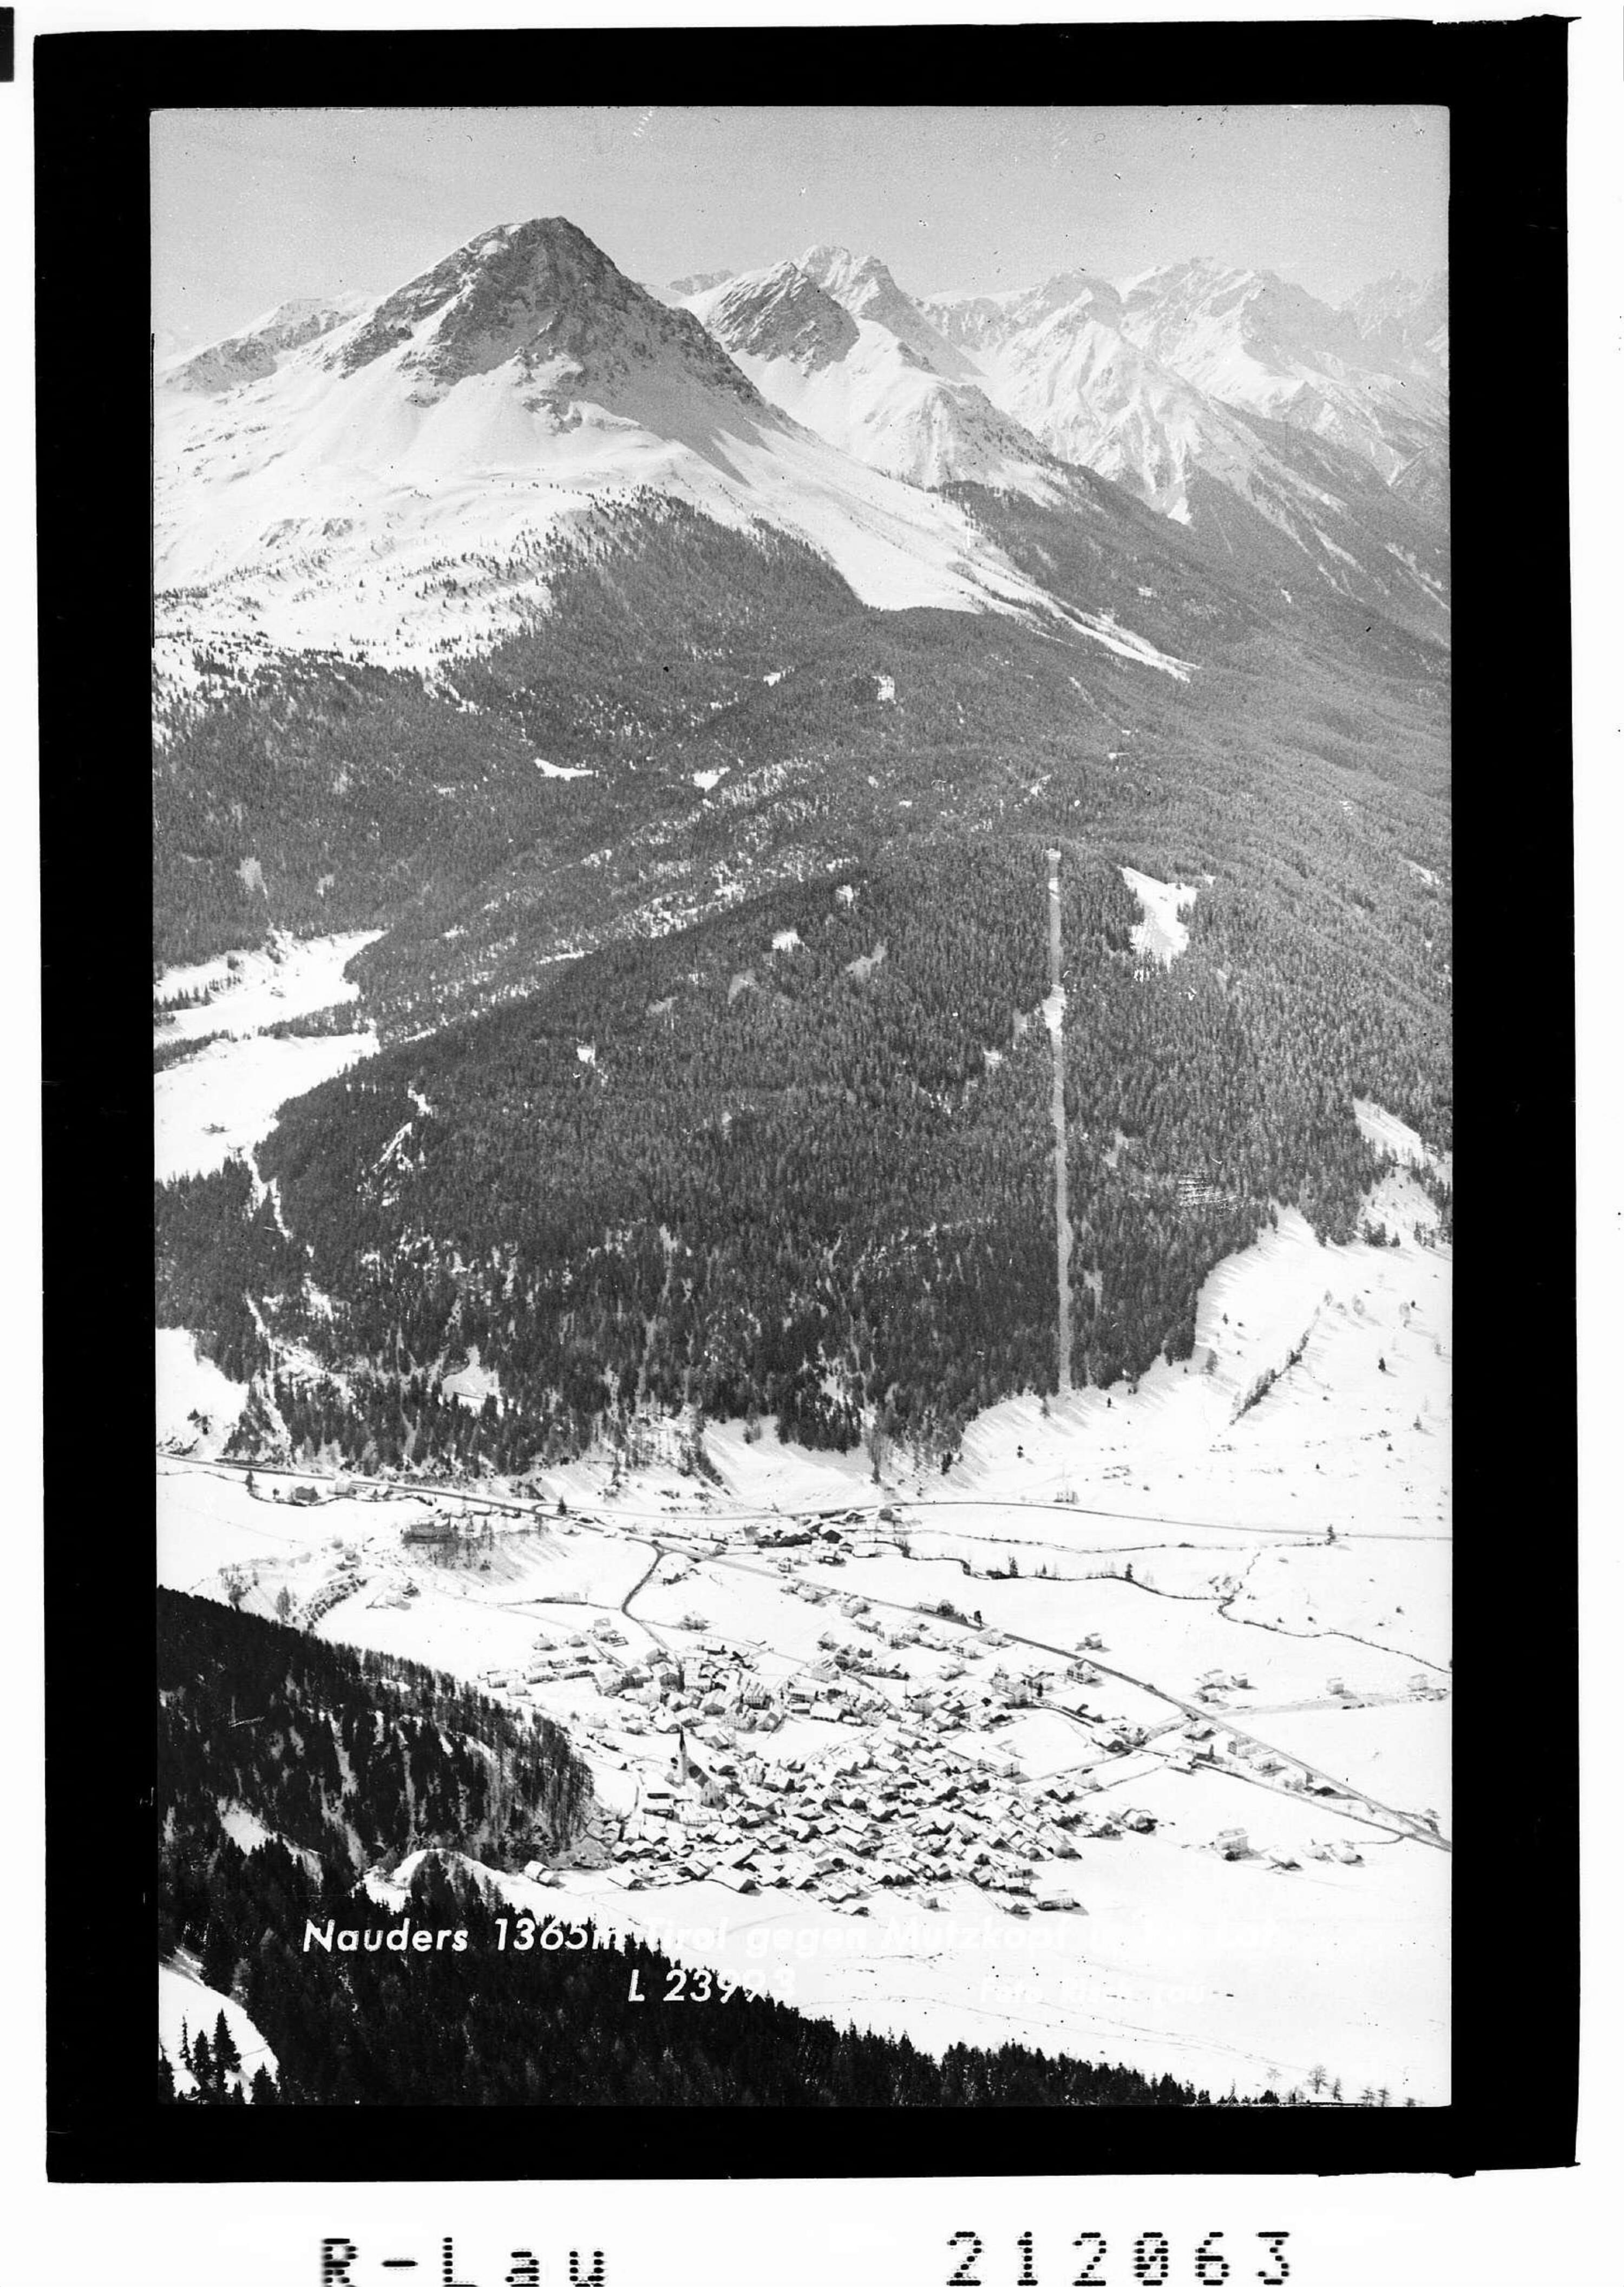 Nauders 1365 m Tirol gegen Mutzkopf und Piz Lat></div>


    <hr>
    <div class=